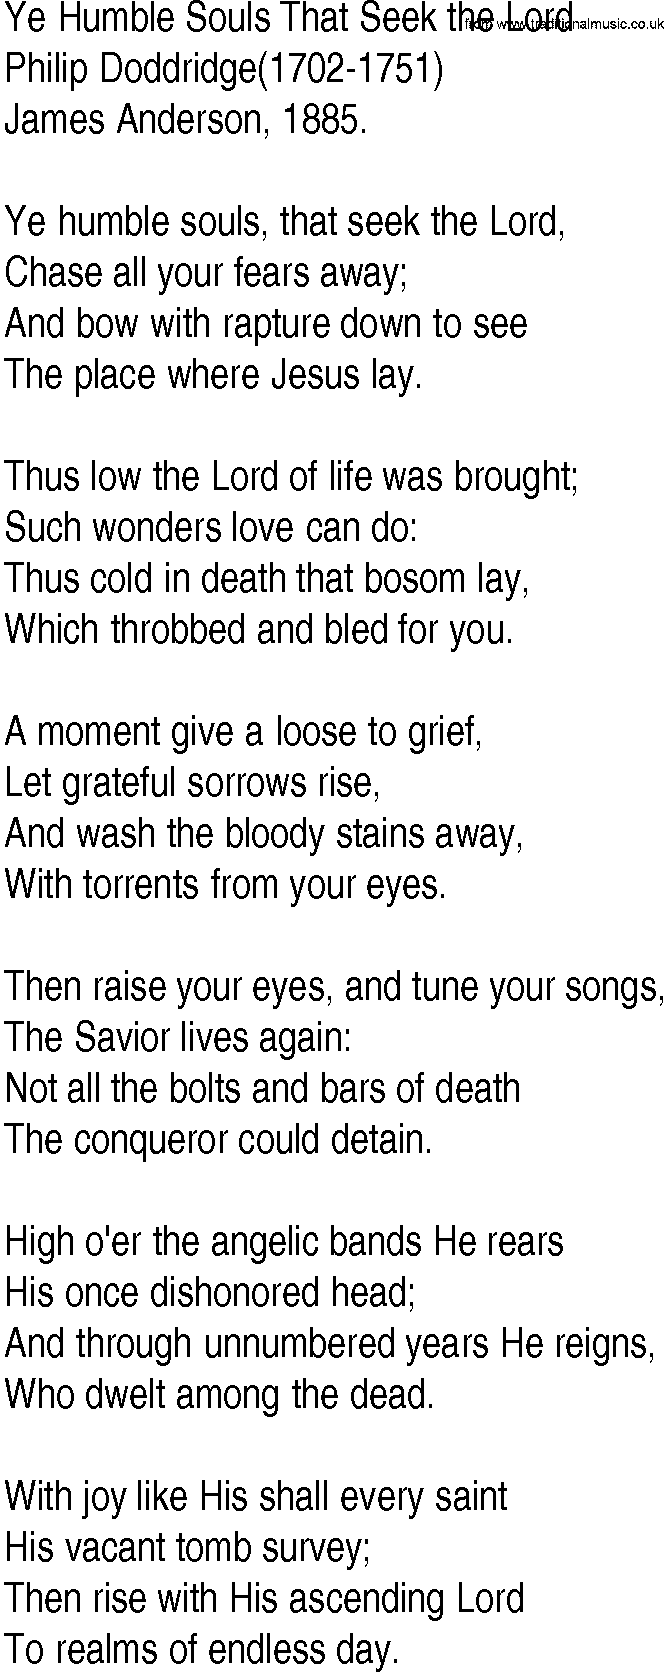 Hymn and Gospel Song: Ye Humble Souls That Seek the Lord by Philip Doddridge lyrics